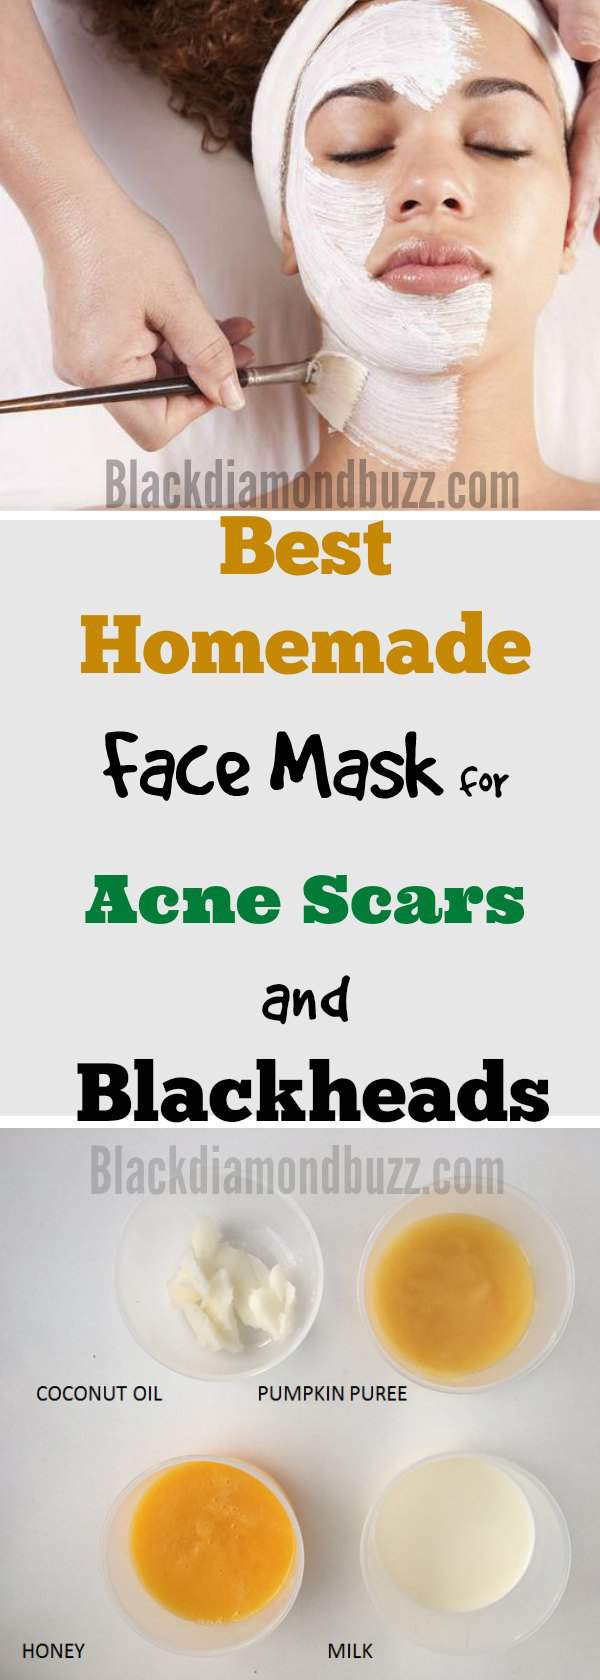 DIY Face Masks For Acne Scars
 DIY Face Mask for Acne 7 Best Homemade Face Masks